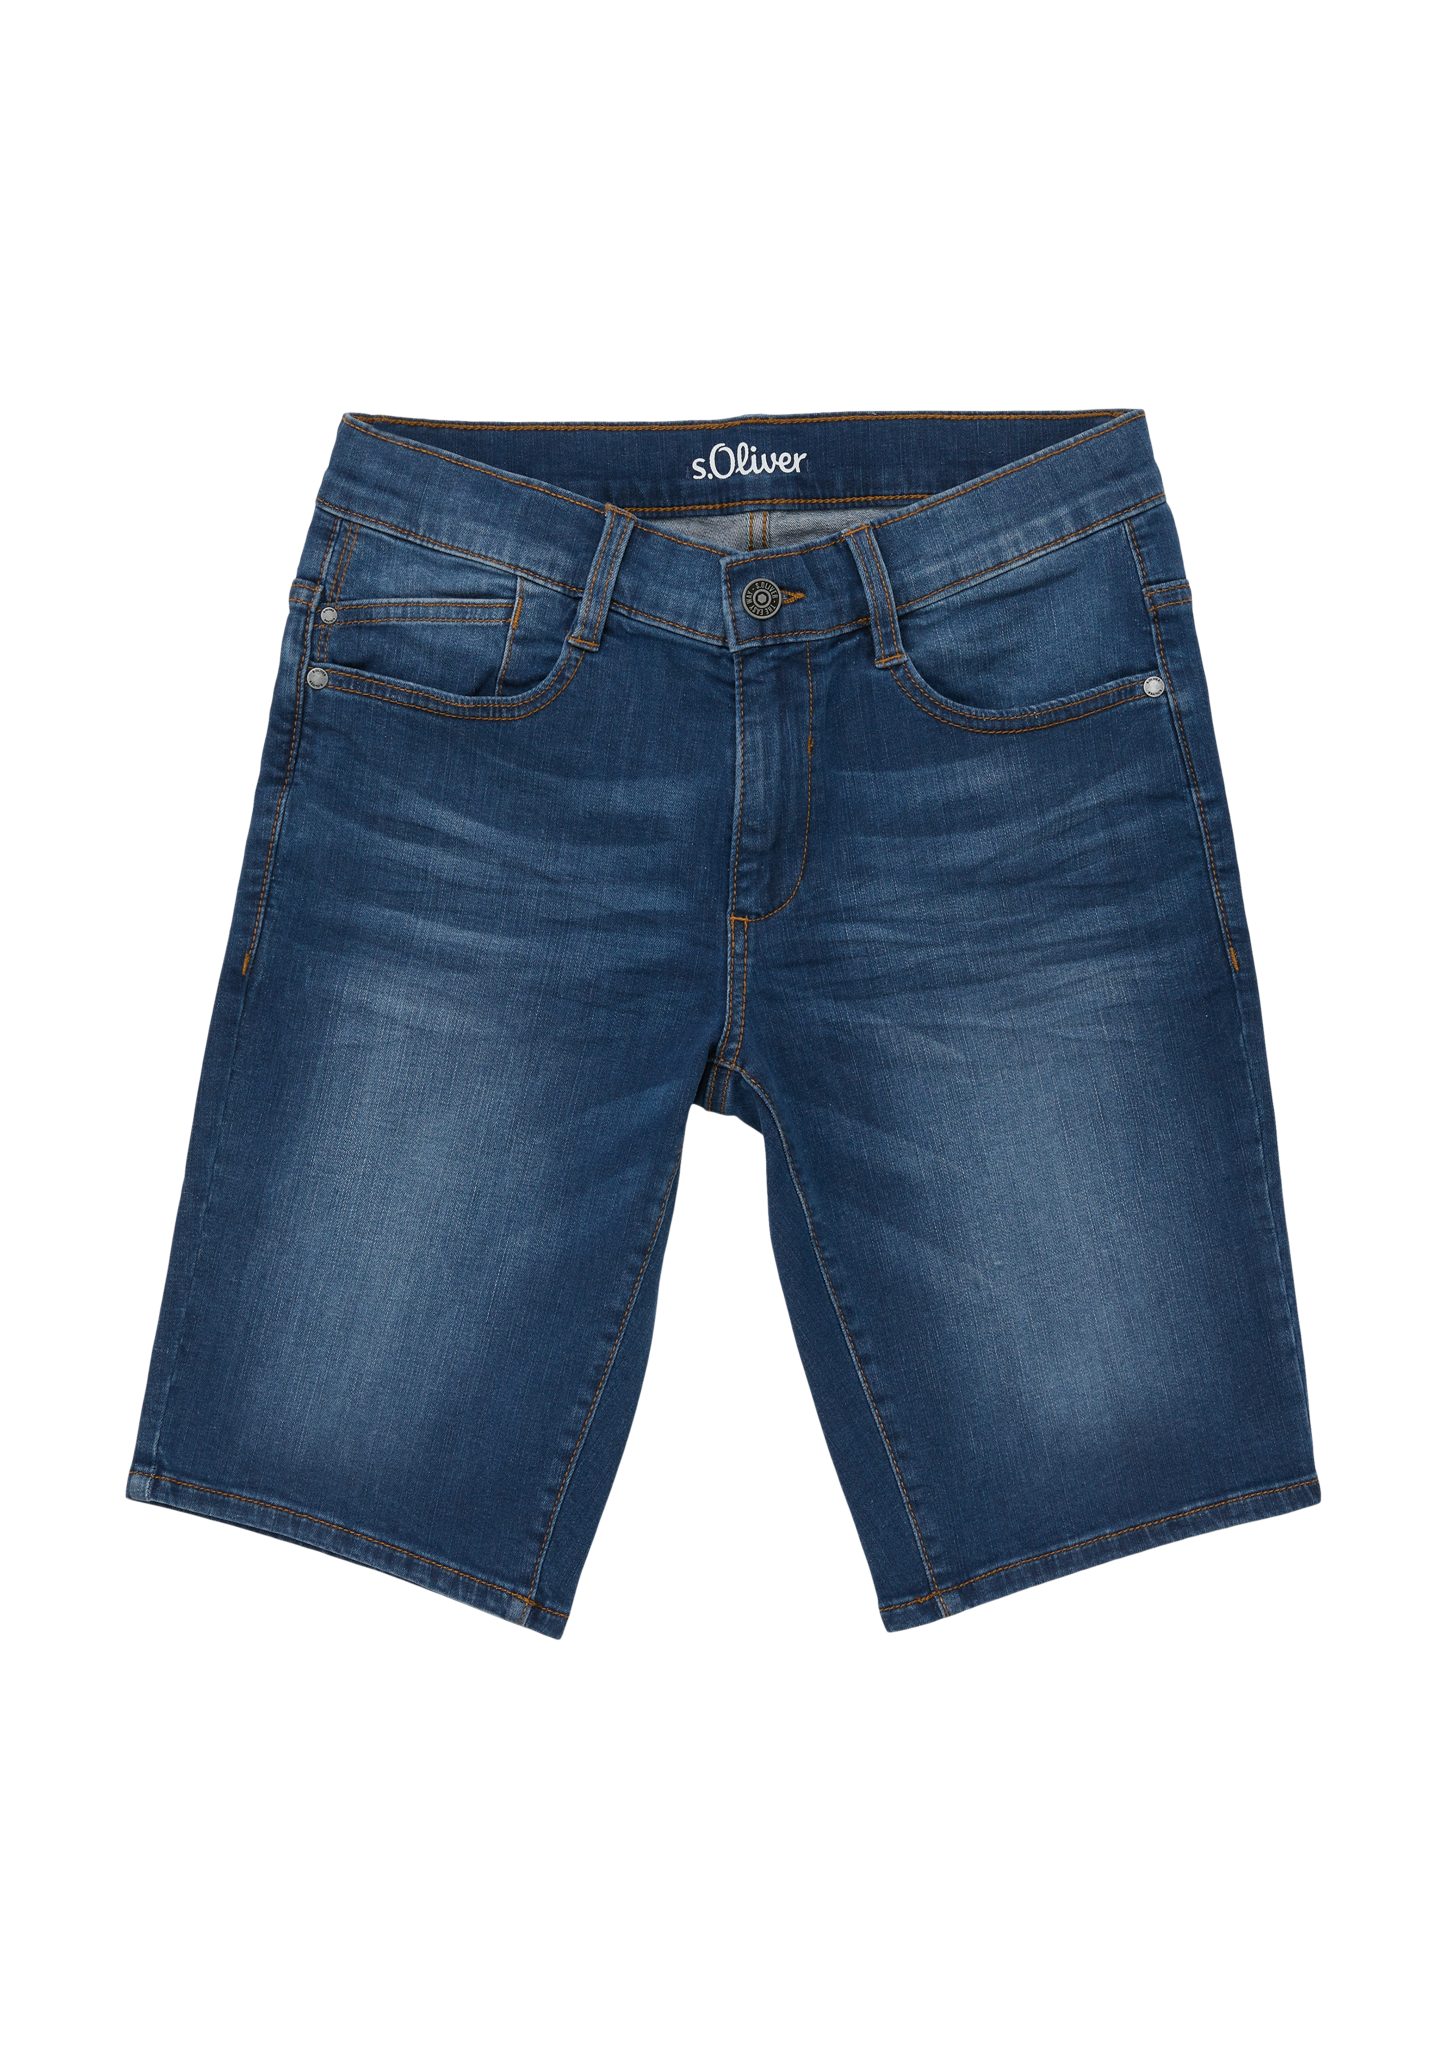 Jeans-Bermuda Kontrastnähte, / Slim Mid Waschung Fit / Jeansshorts / Seattle Leg Rise Regular s.Oliver